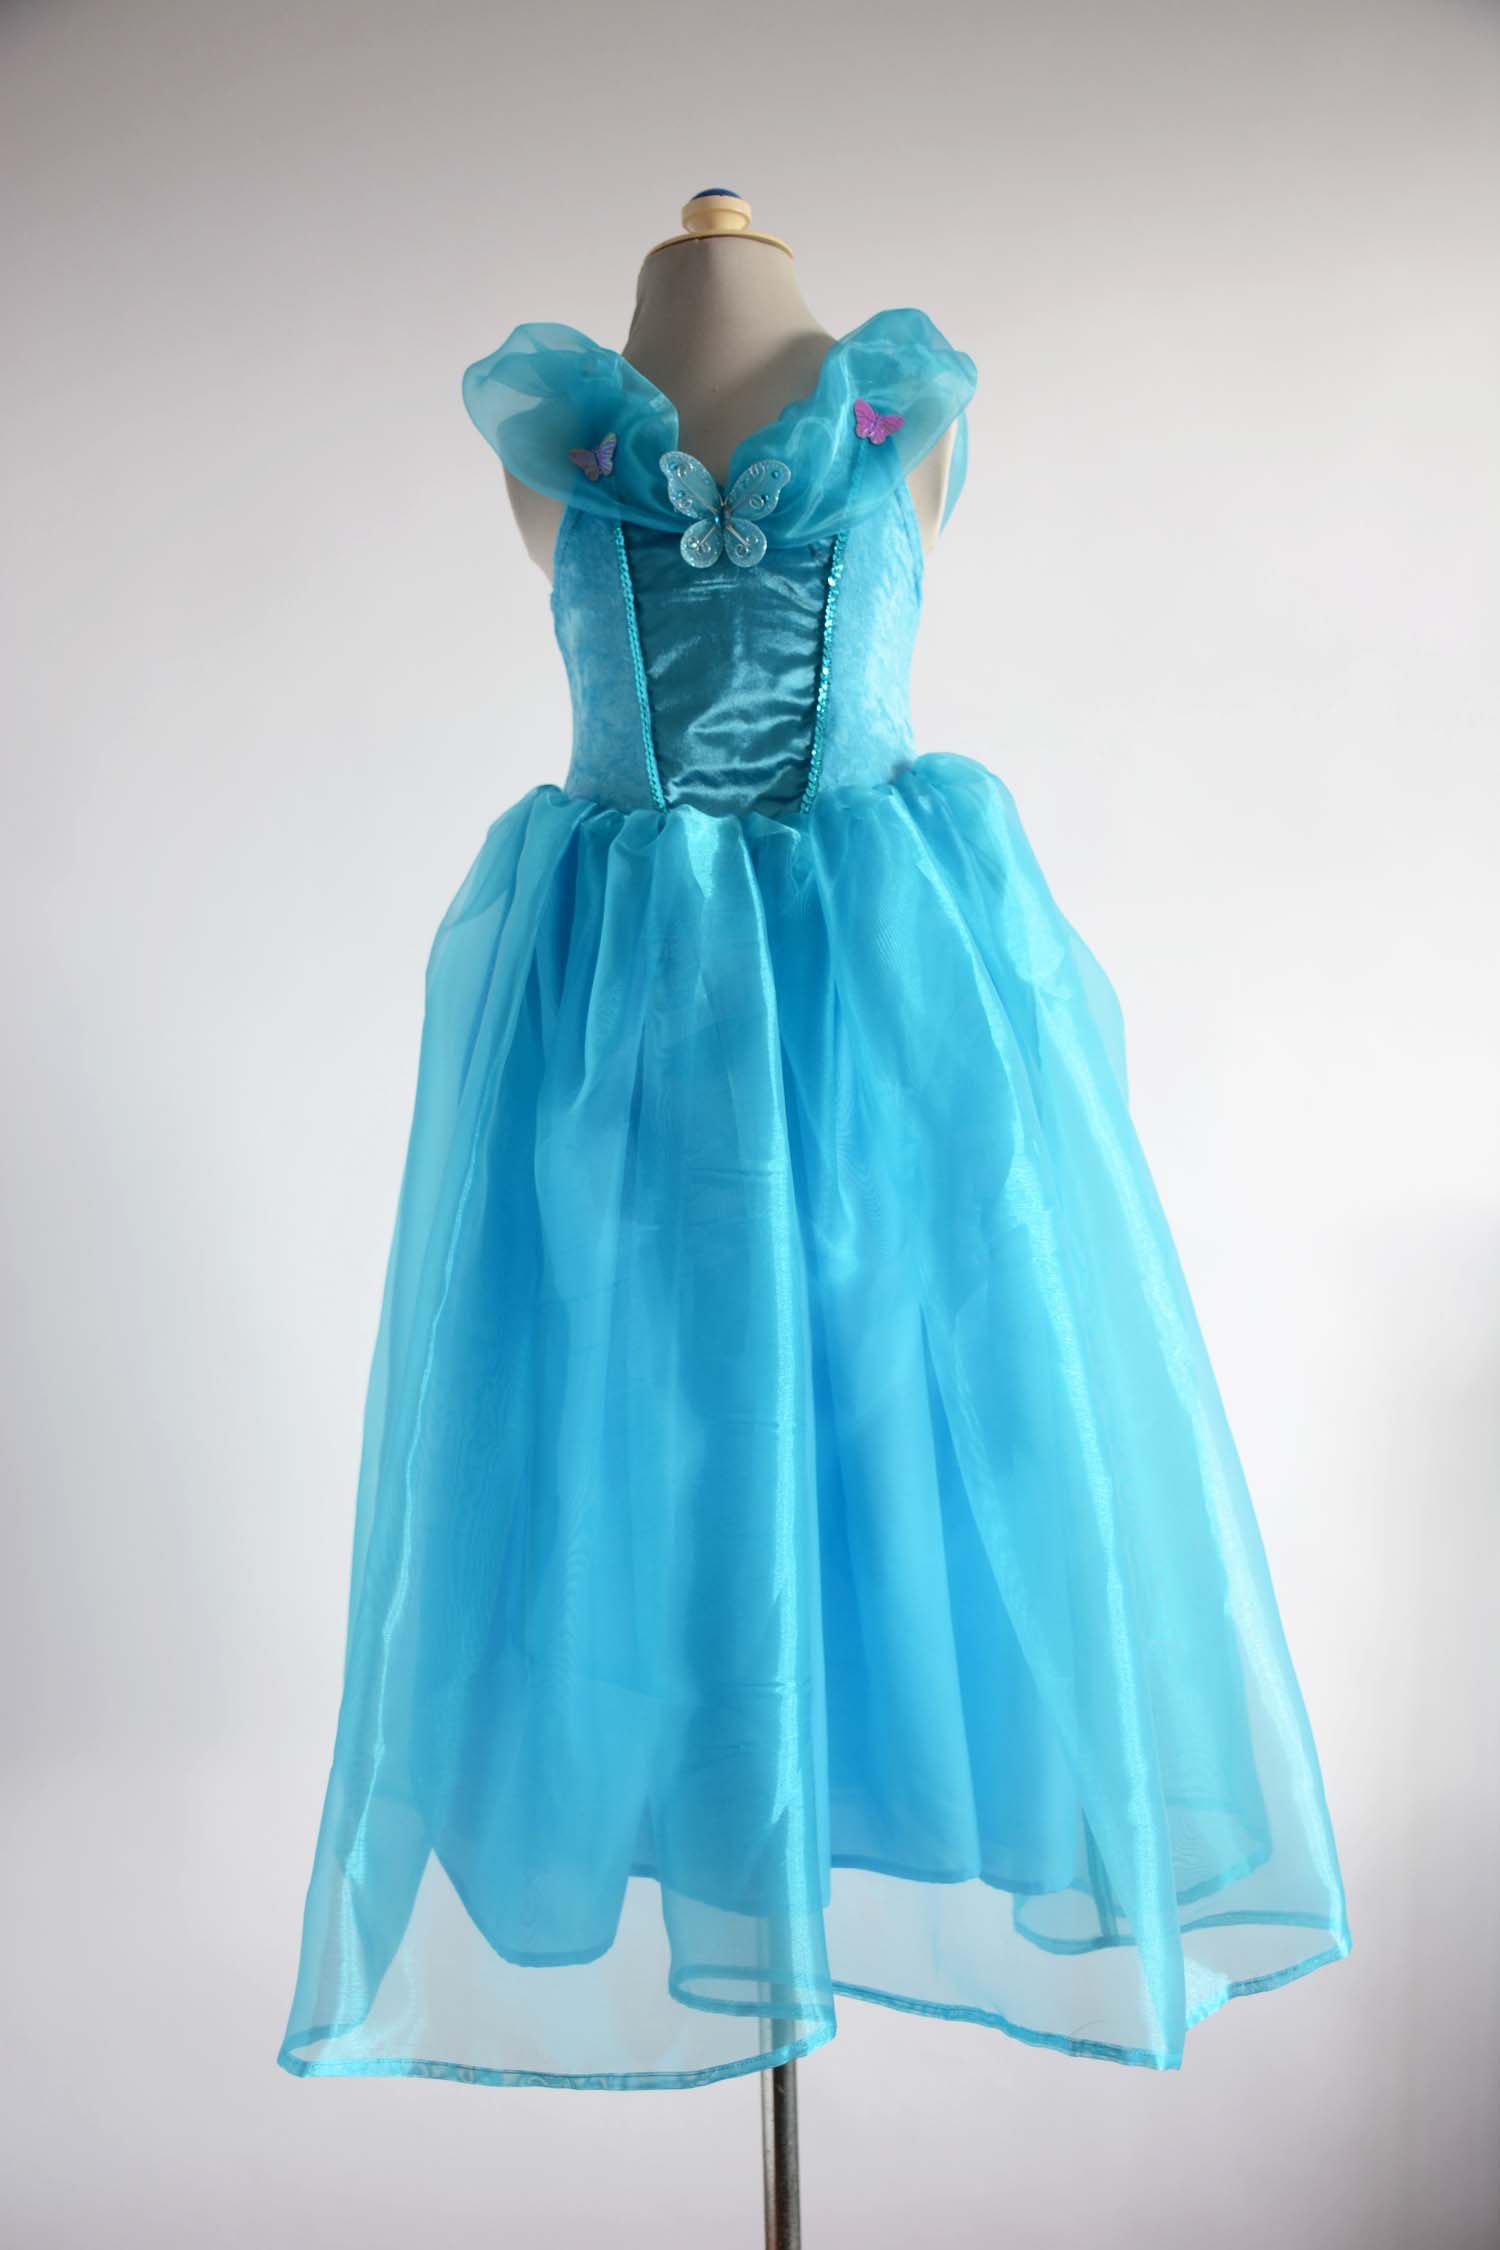 Princess Dress - Blue - The Fairy Shop